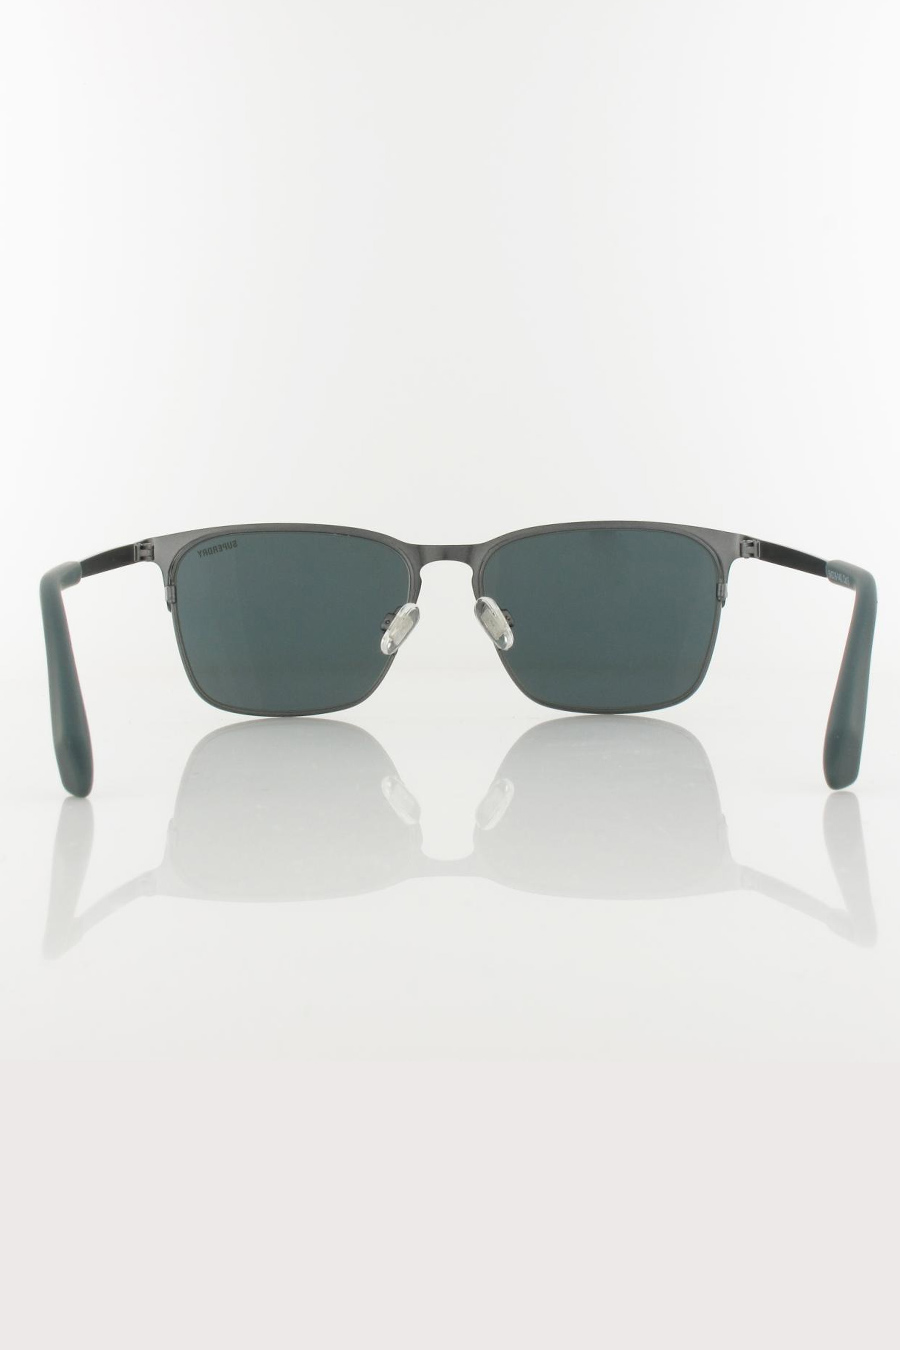 Sunglasses SUPERDRY SDS-5019-005